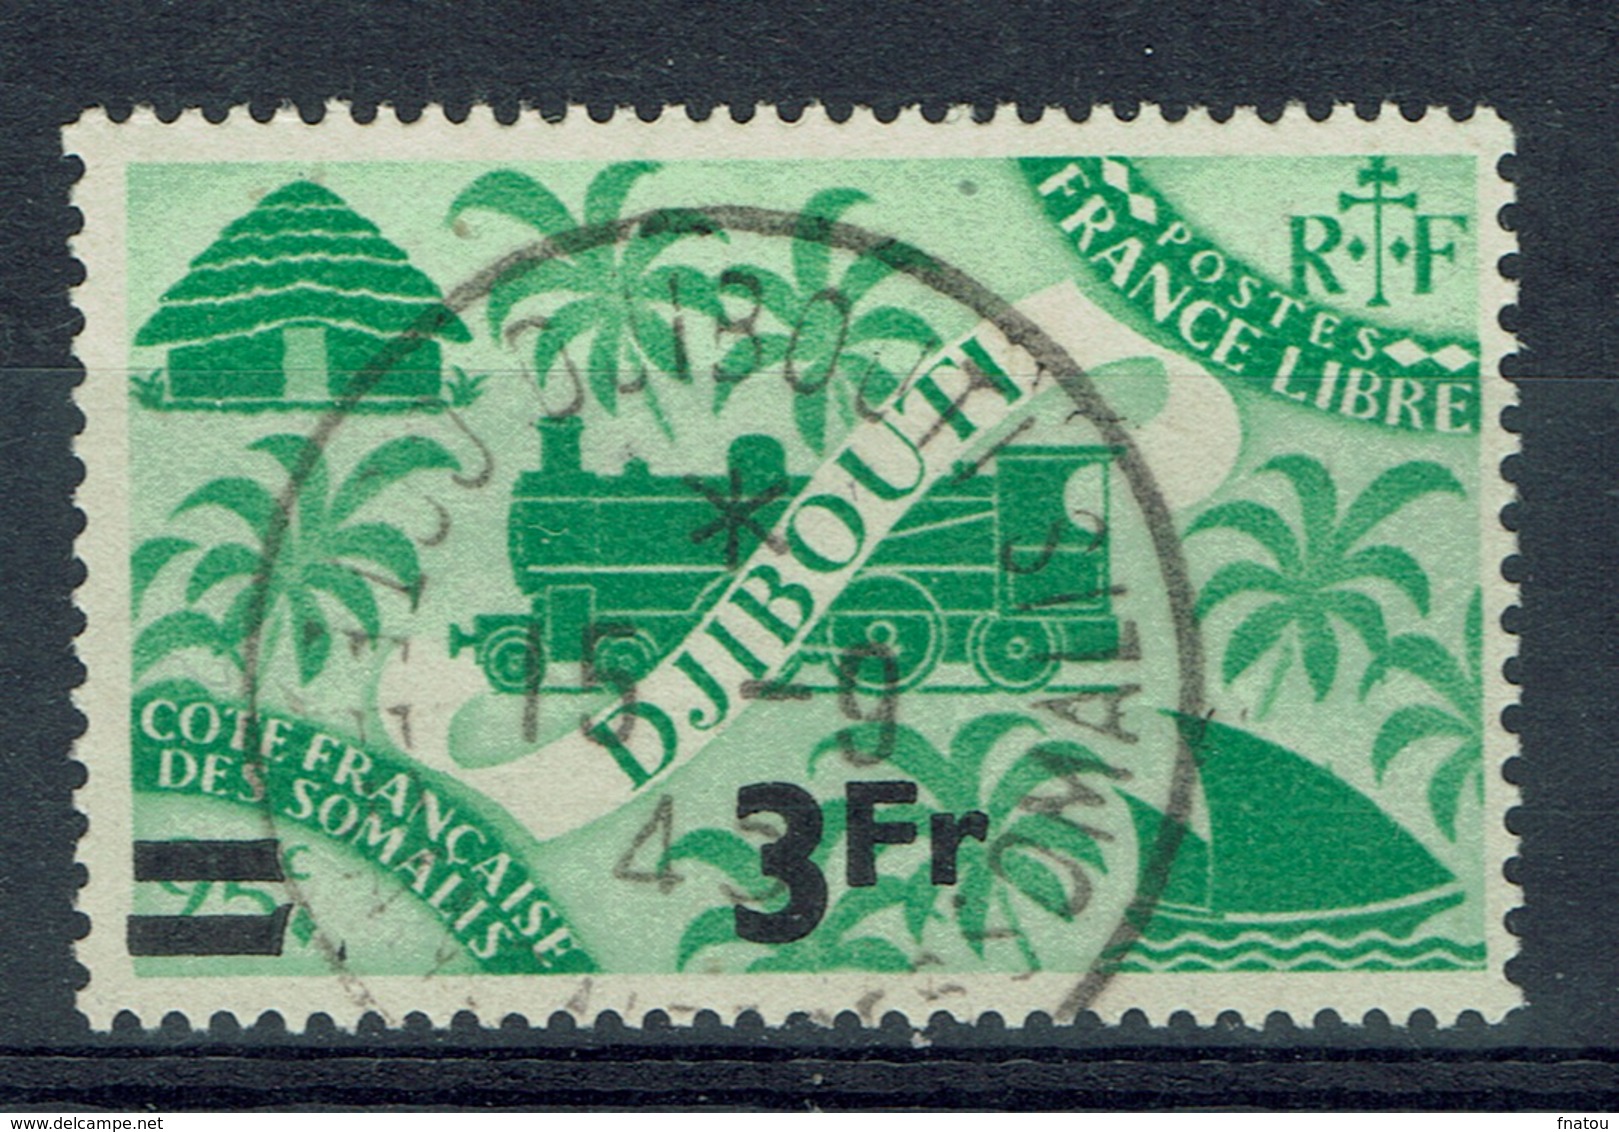 French Somali Coast, 3fr/25c., London Set Overprint, 1945, VFU - Used Stamps